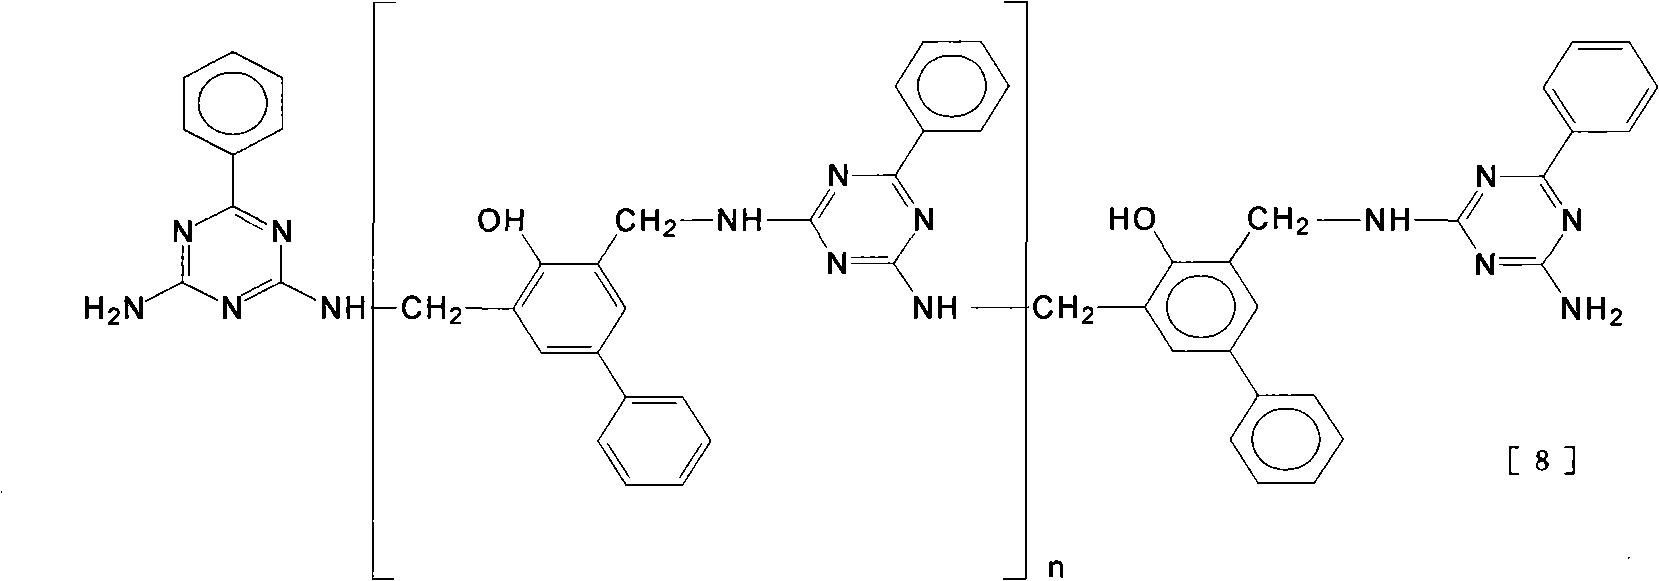 Synthetic method of nitrogen-containing flame-retardant phenolic resin